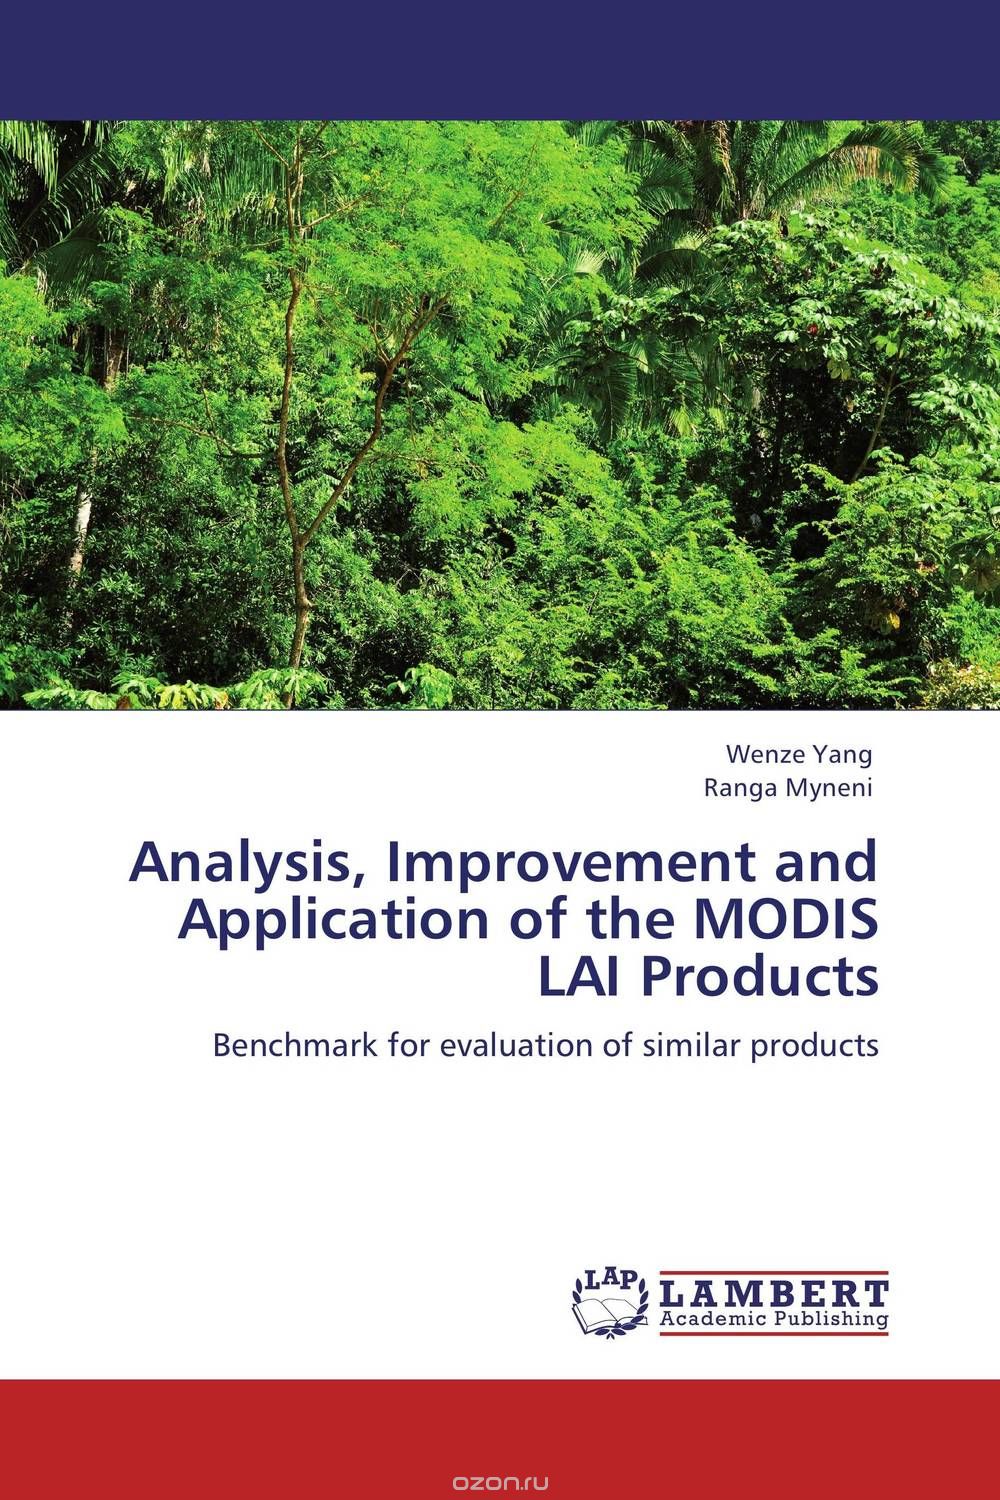 Скачать книгу "Analysis, Improvement and Application of the MODIS LAI Products"